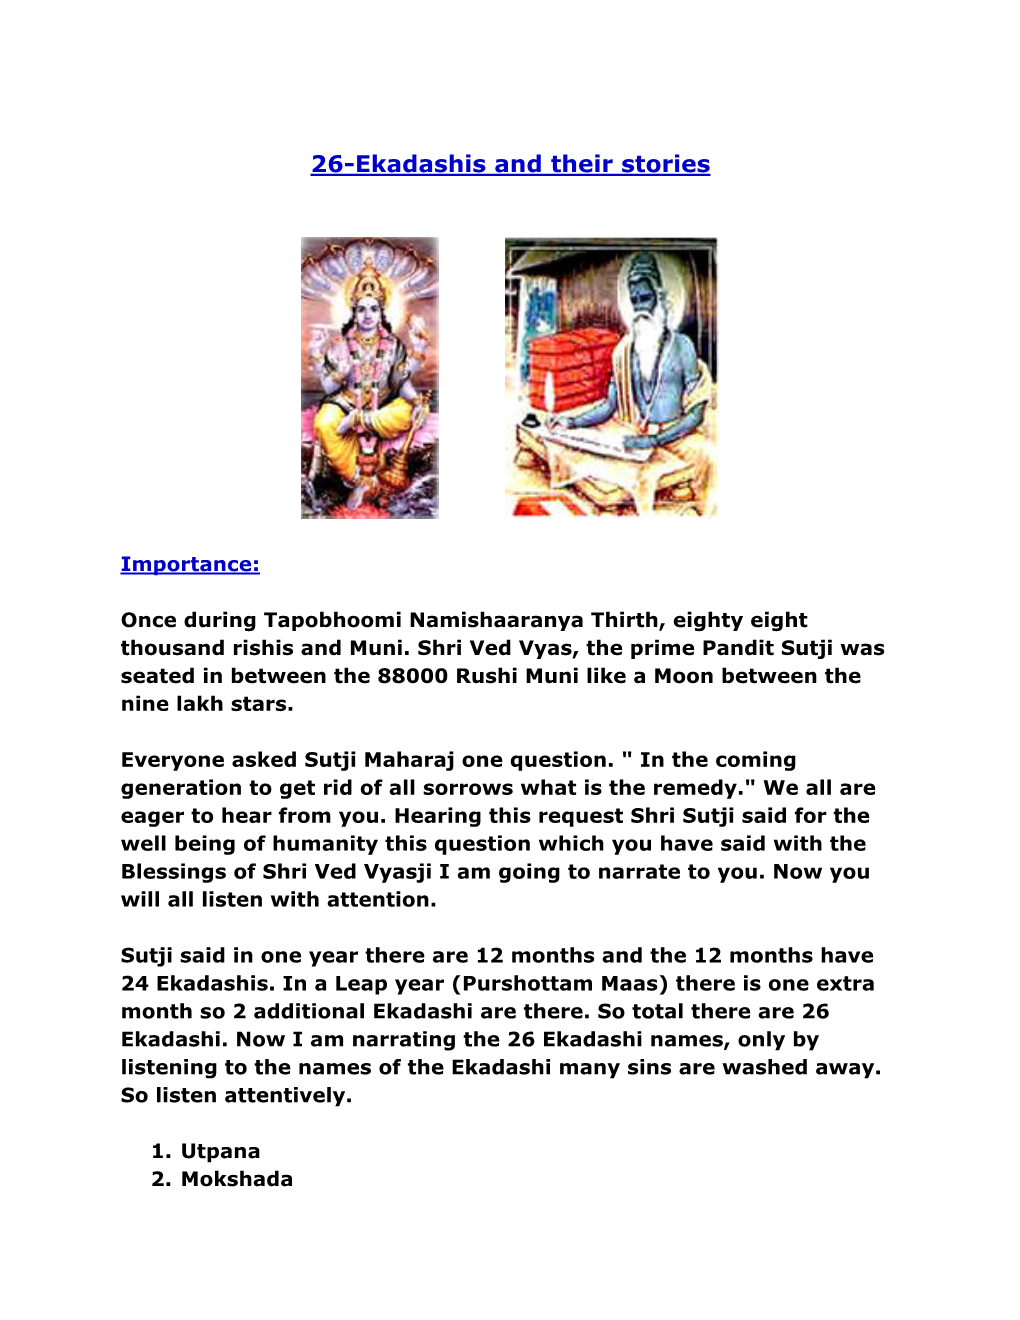 26-Ekadashis and Their Stories